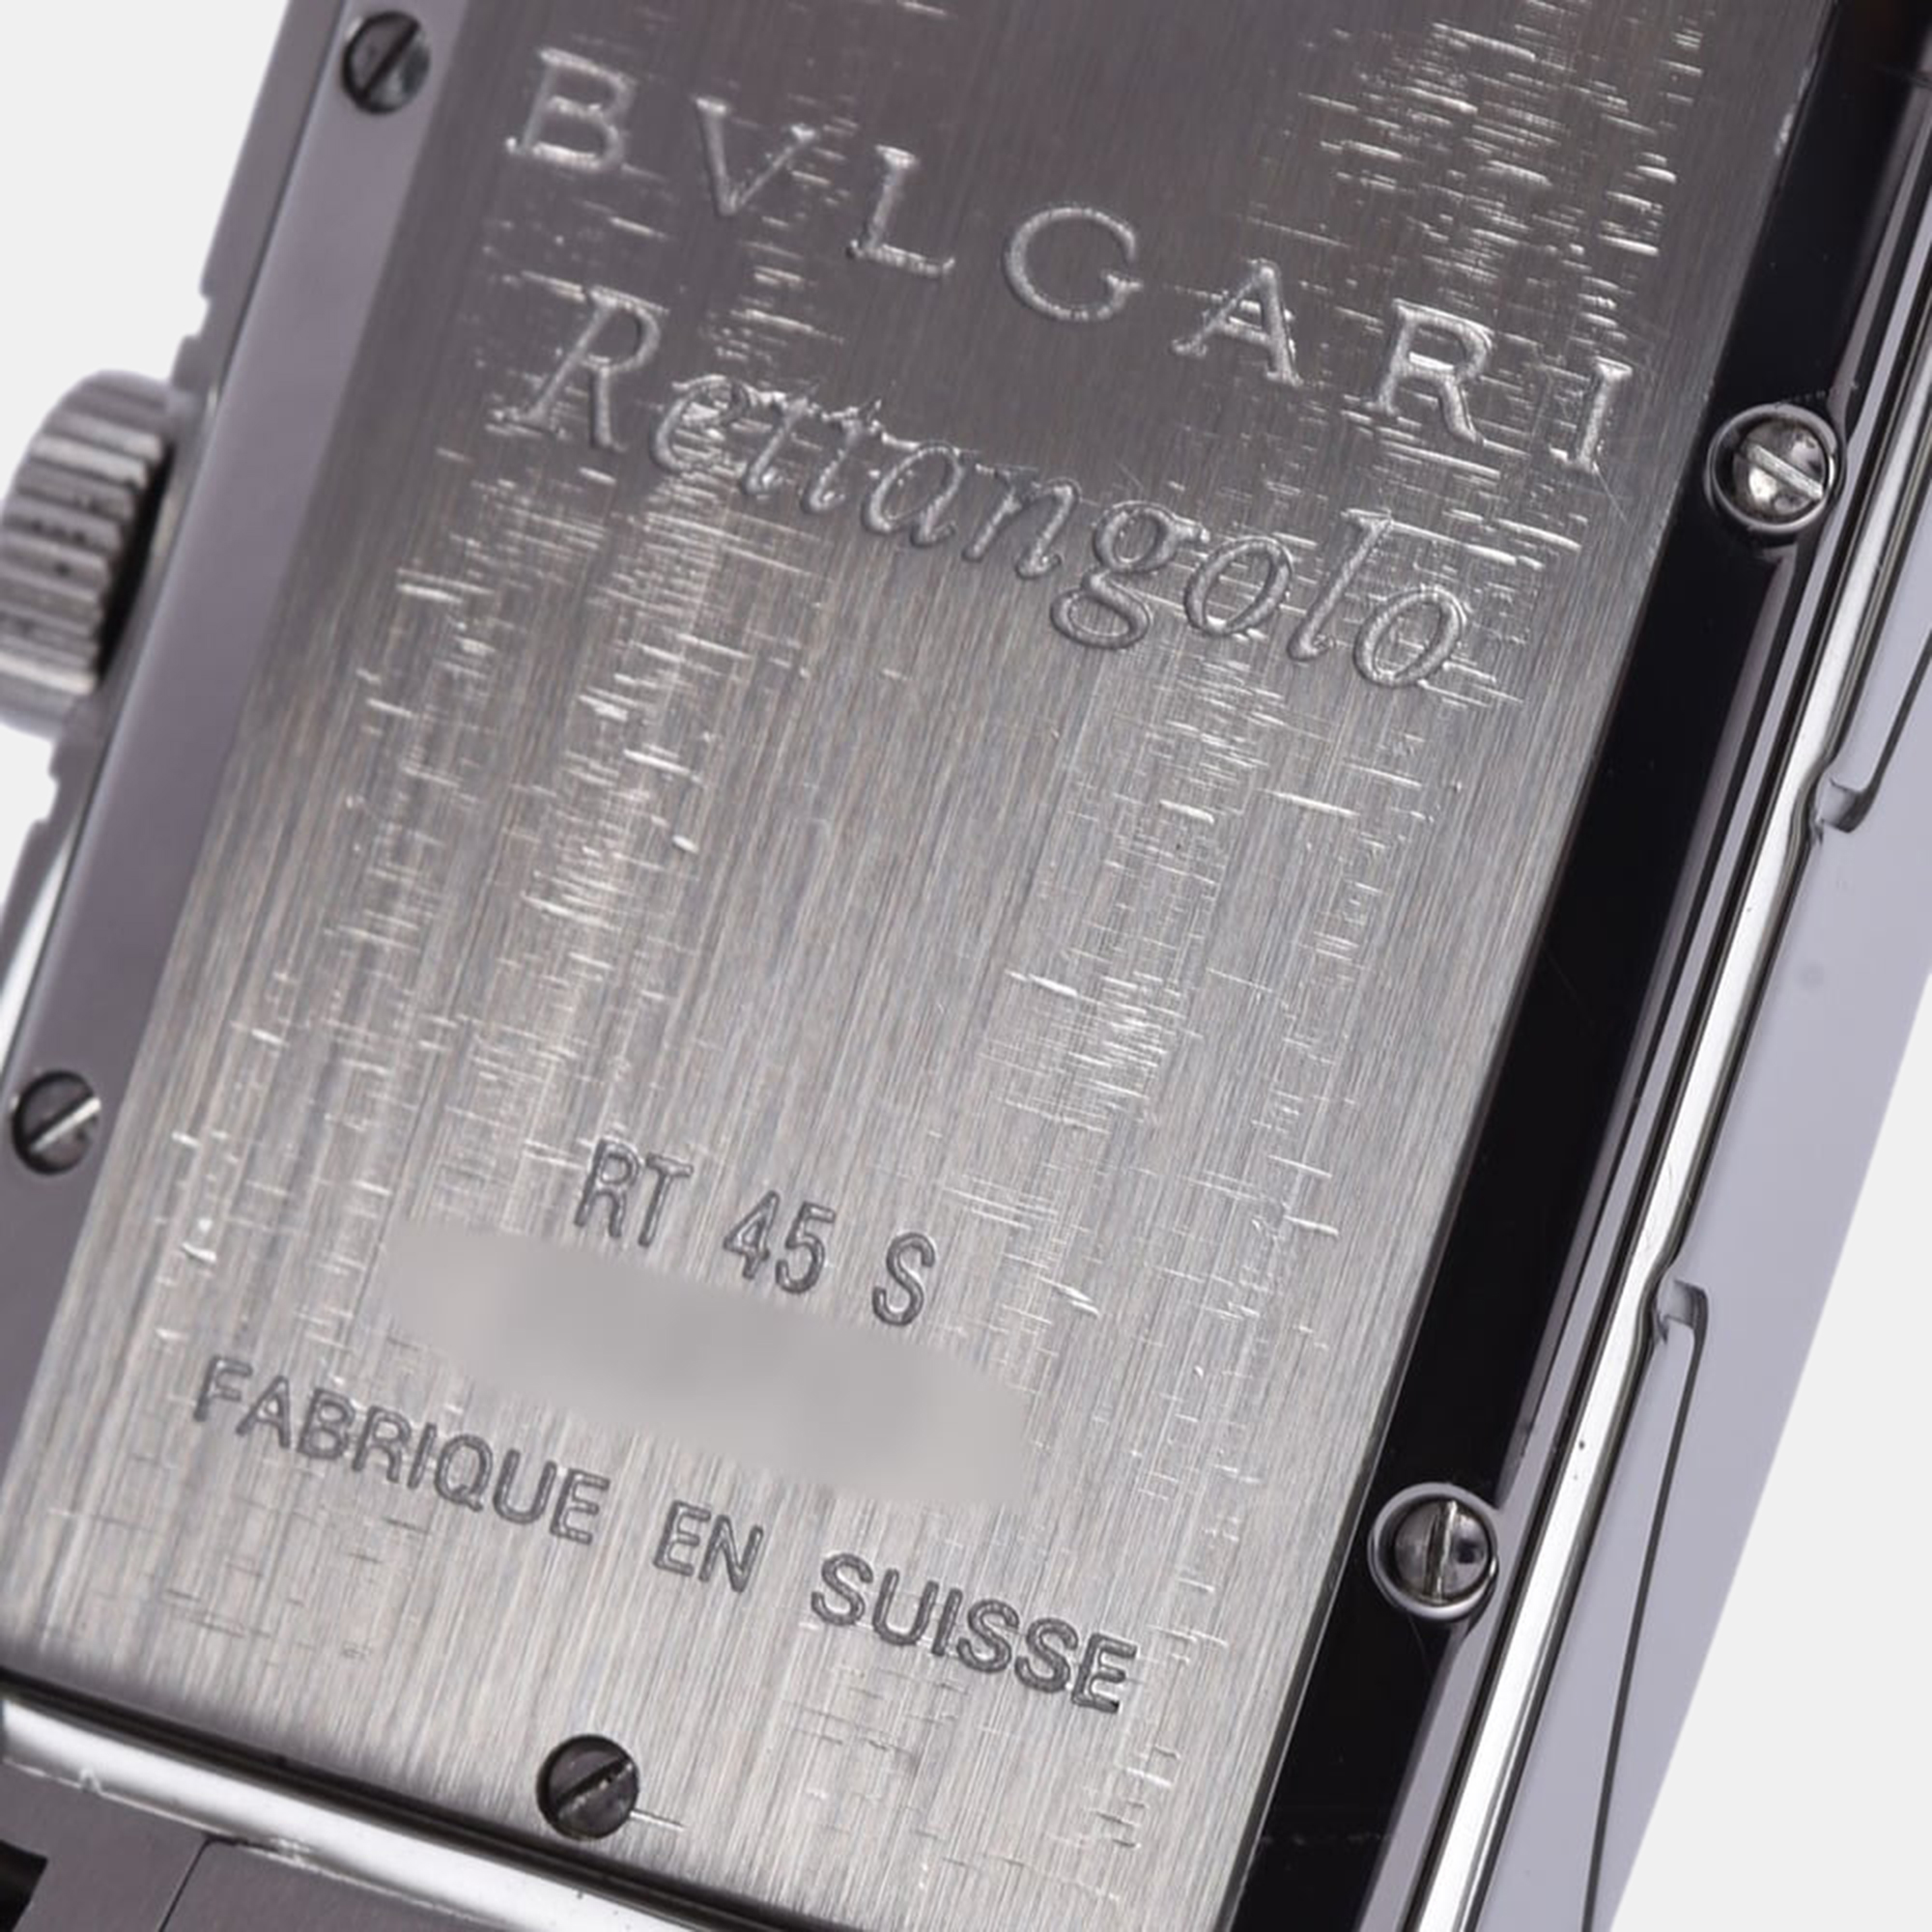 Bvlgari Black Stainless Steel Rettangolo RT45S Automatic Men's Wristwatch 26 Mm